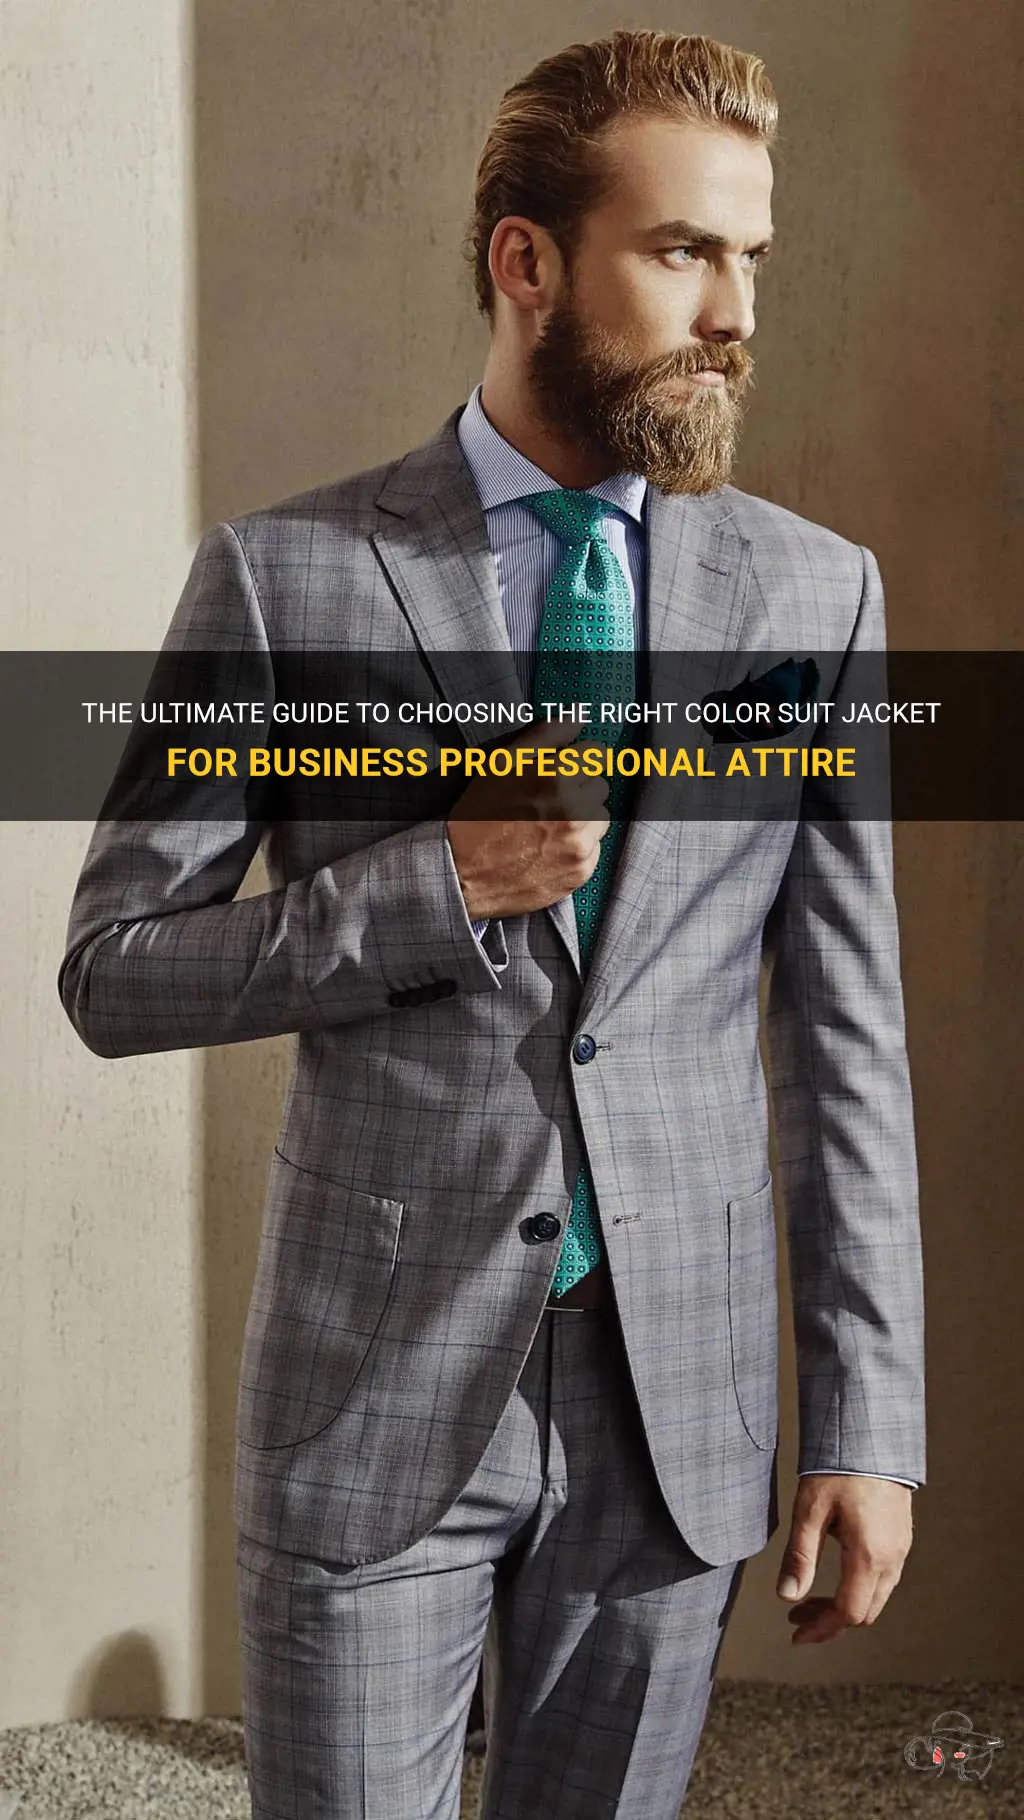 what color suit jacket is business professional attire